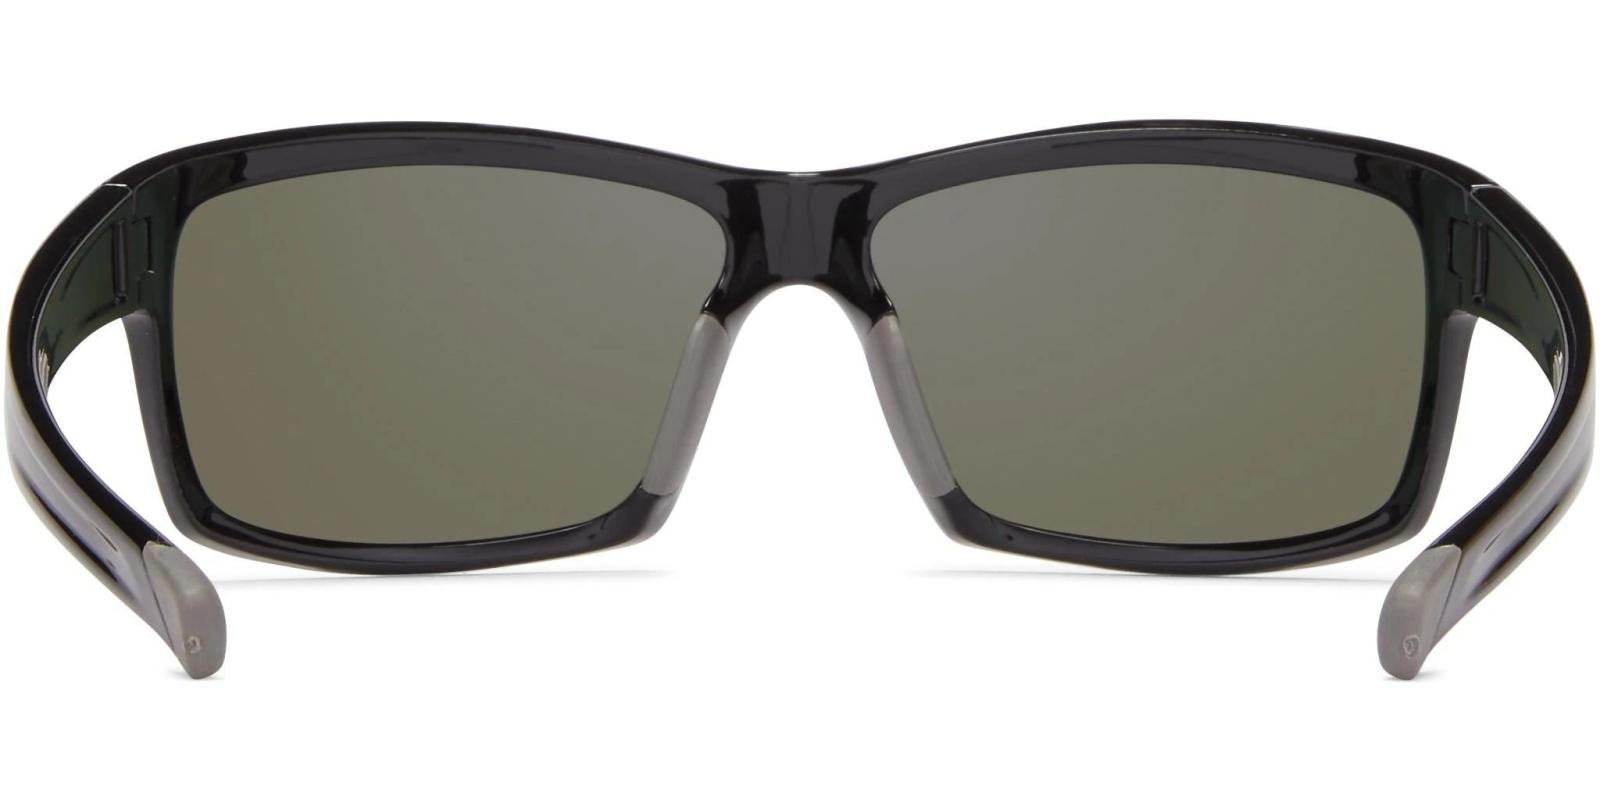 icu Eyewear Marsh Sunglasses